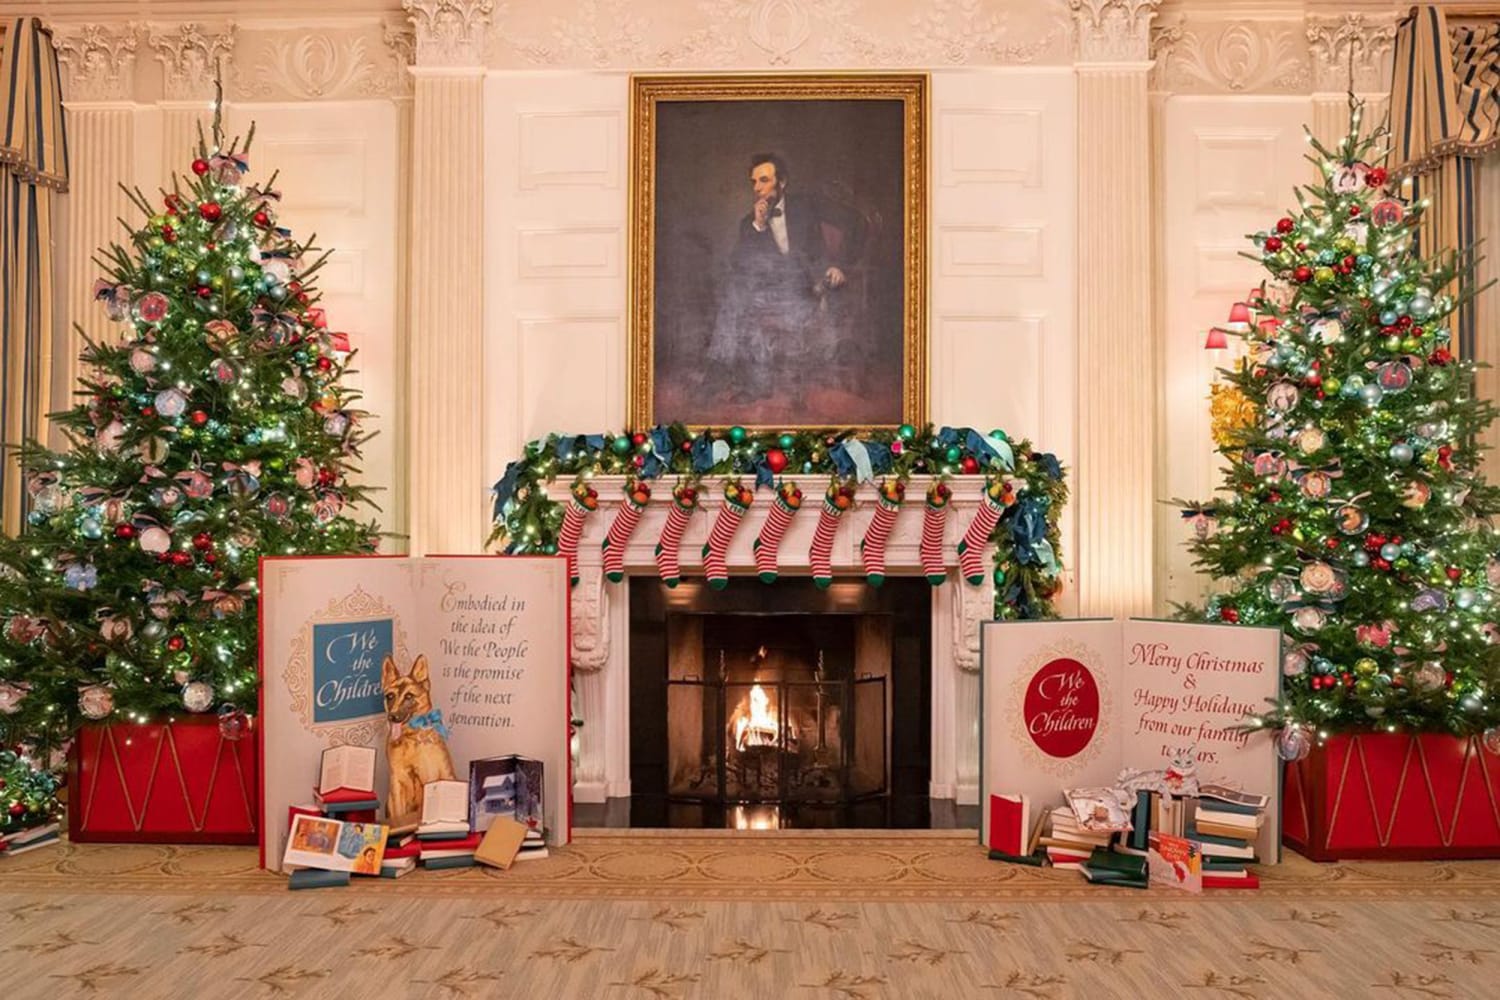 Jill Biden unveils White House holiday decorations